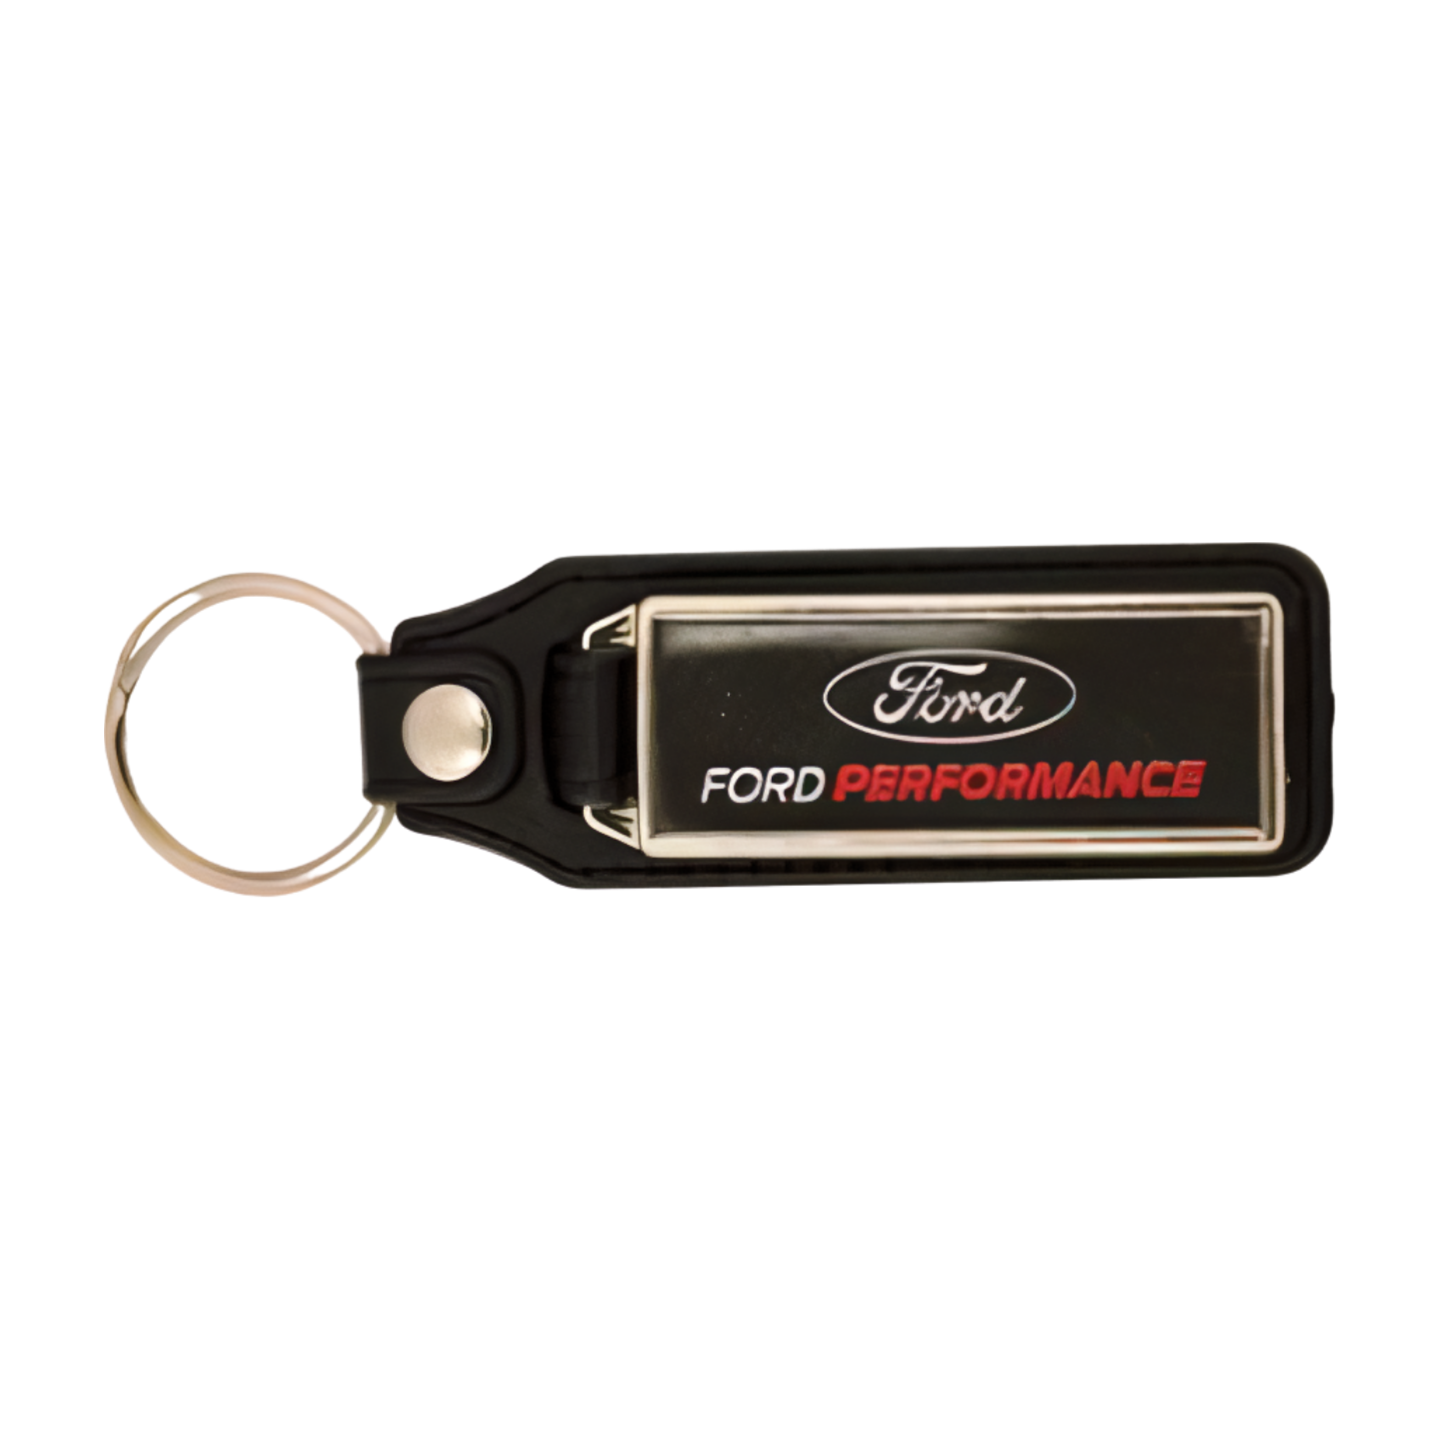 Ford Performance Keychain